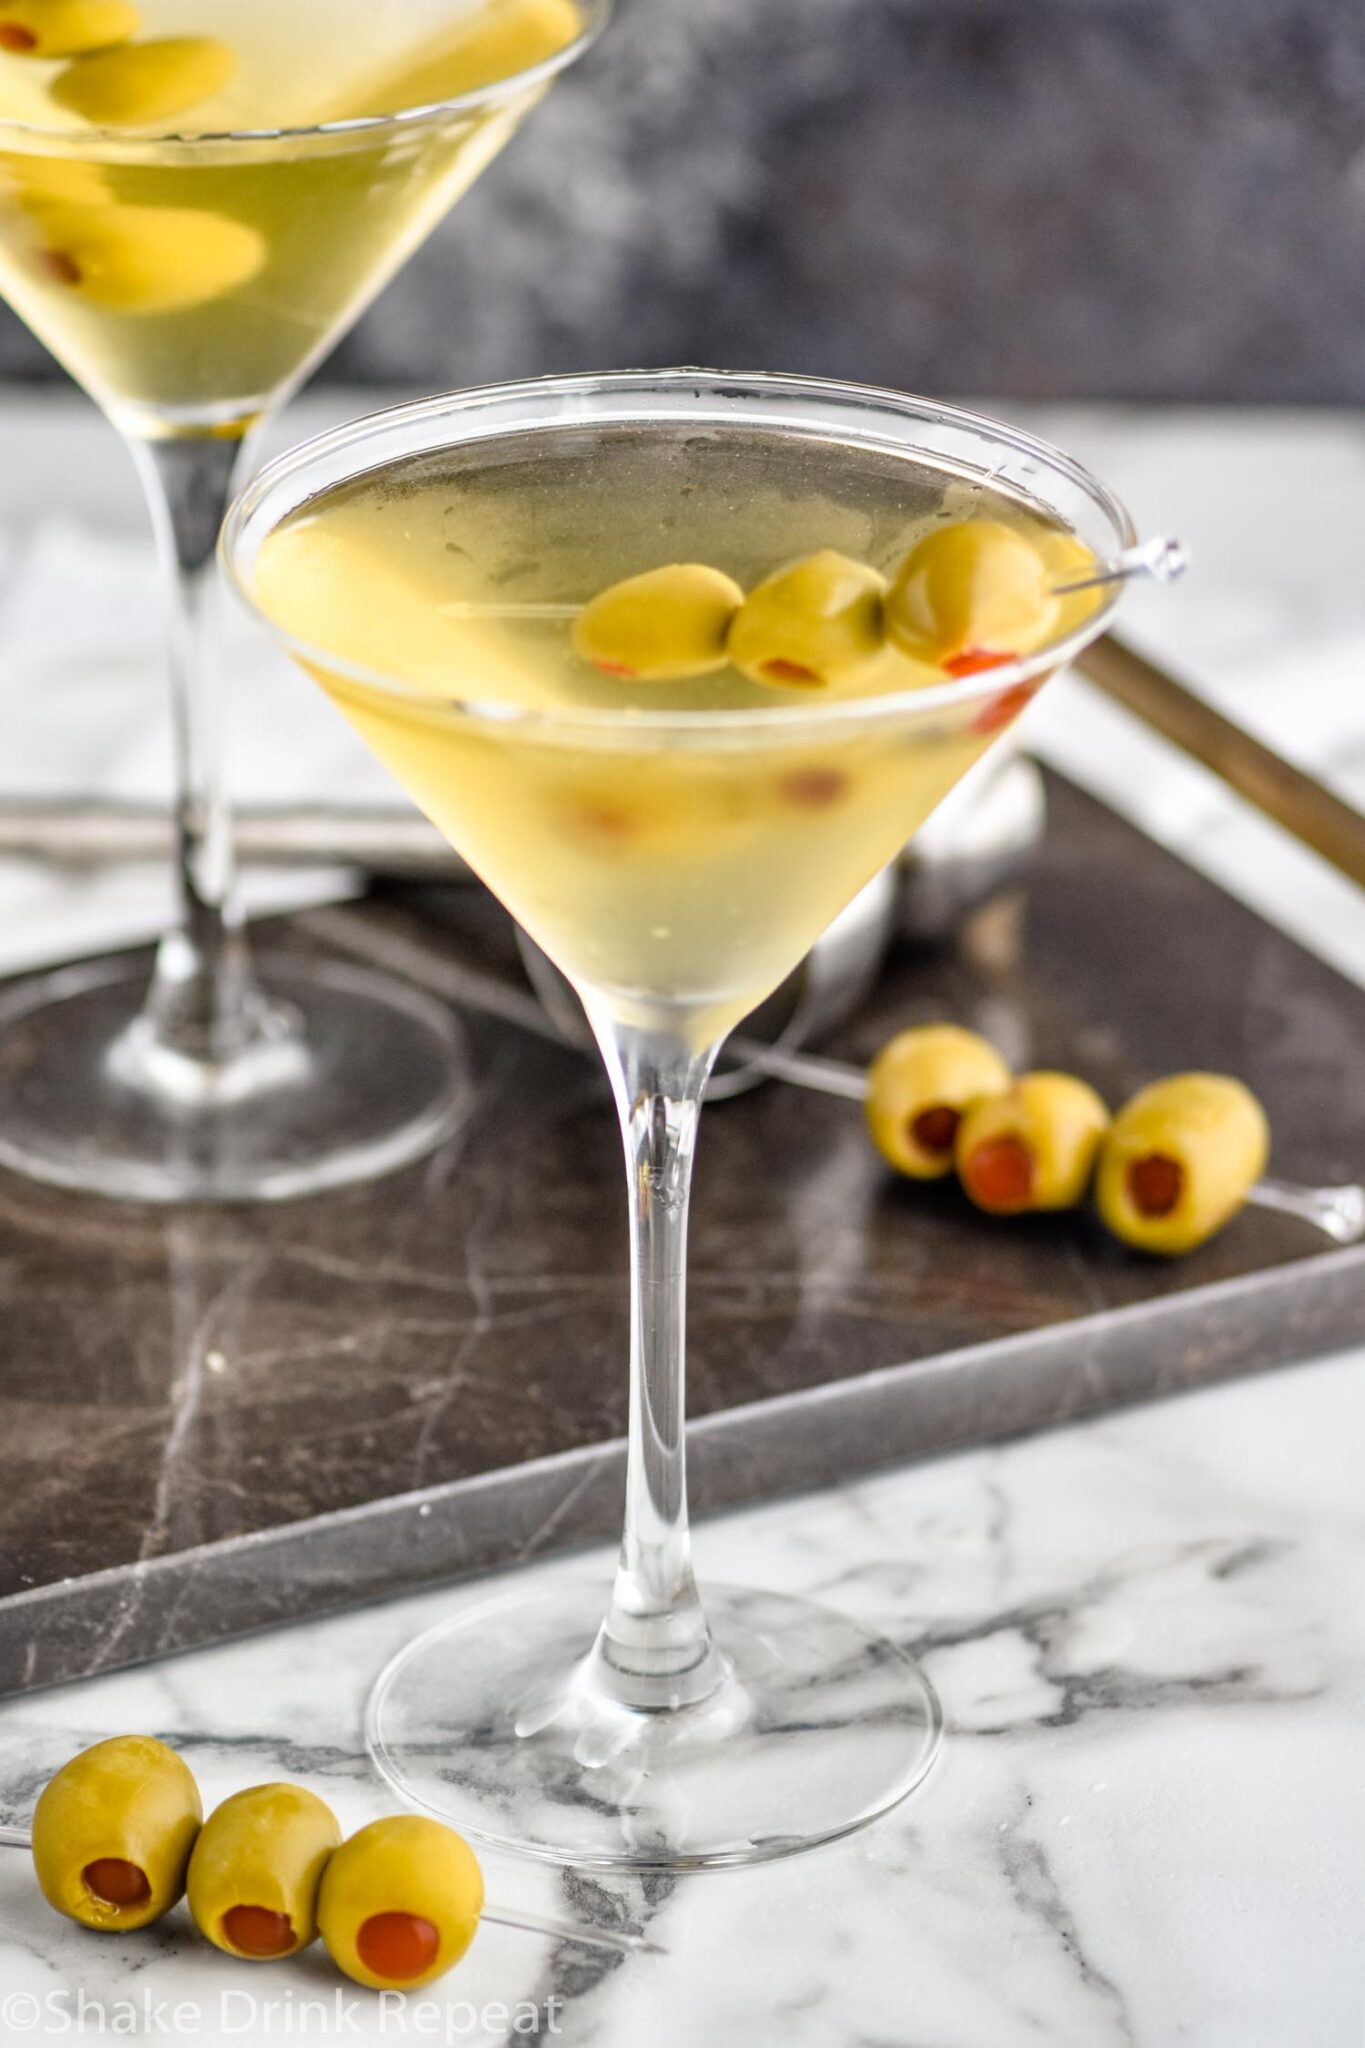 Dirty Martini Recipe - Shake Drink Repeat